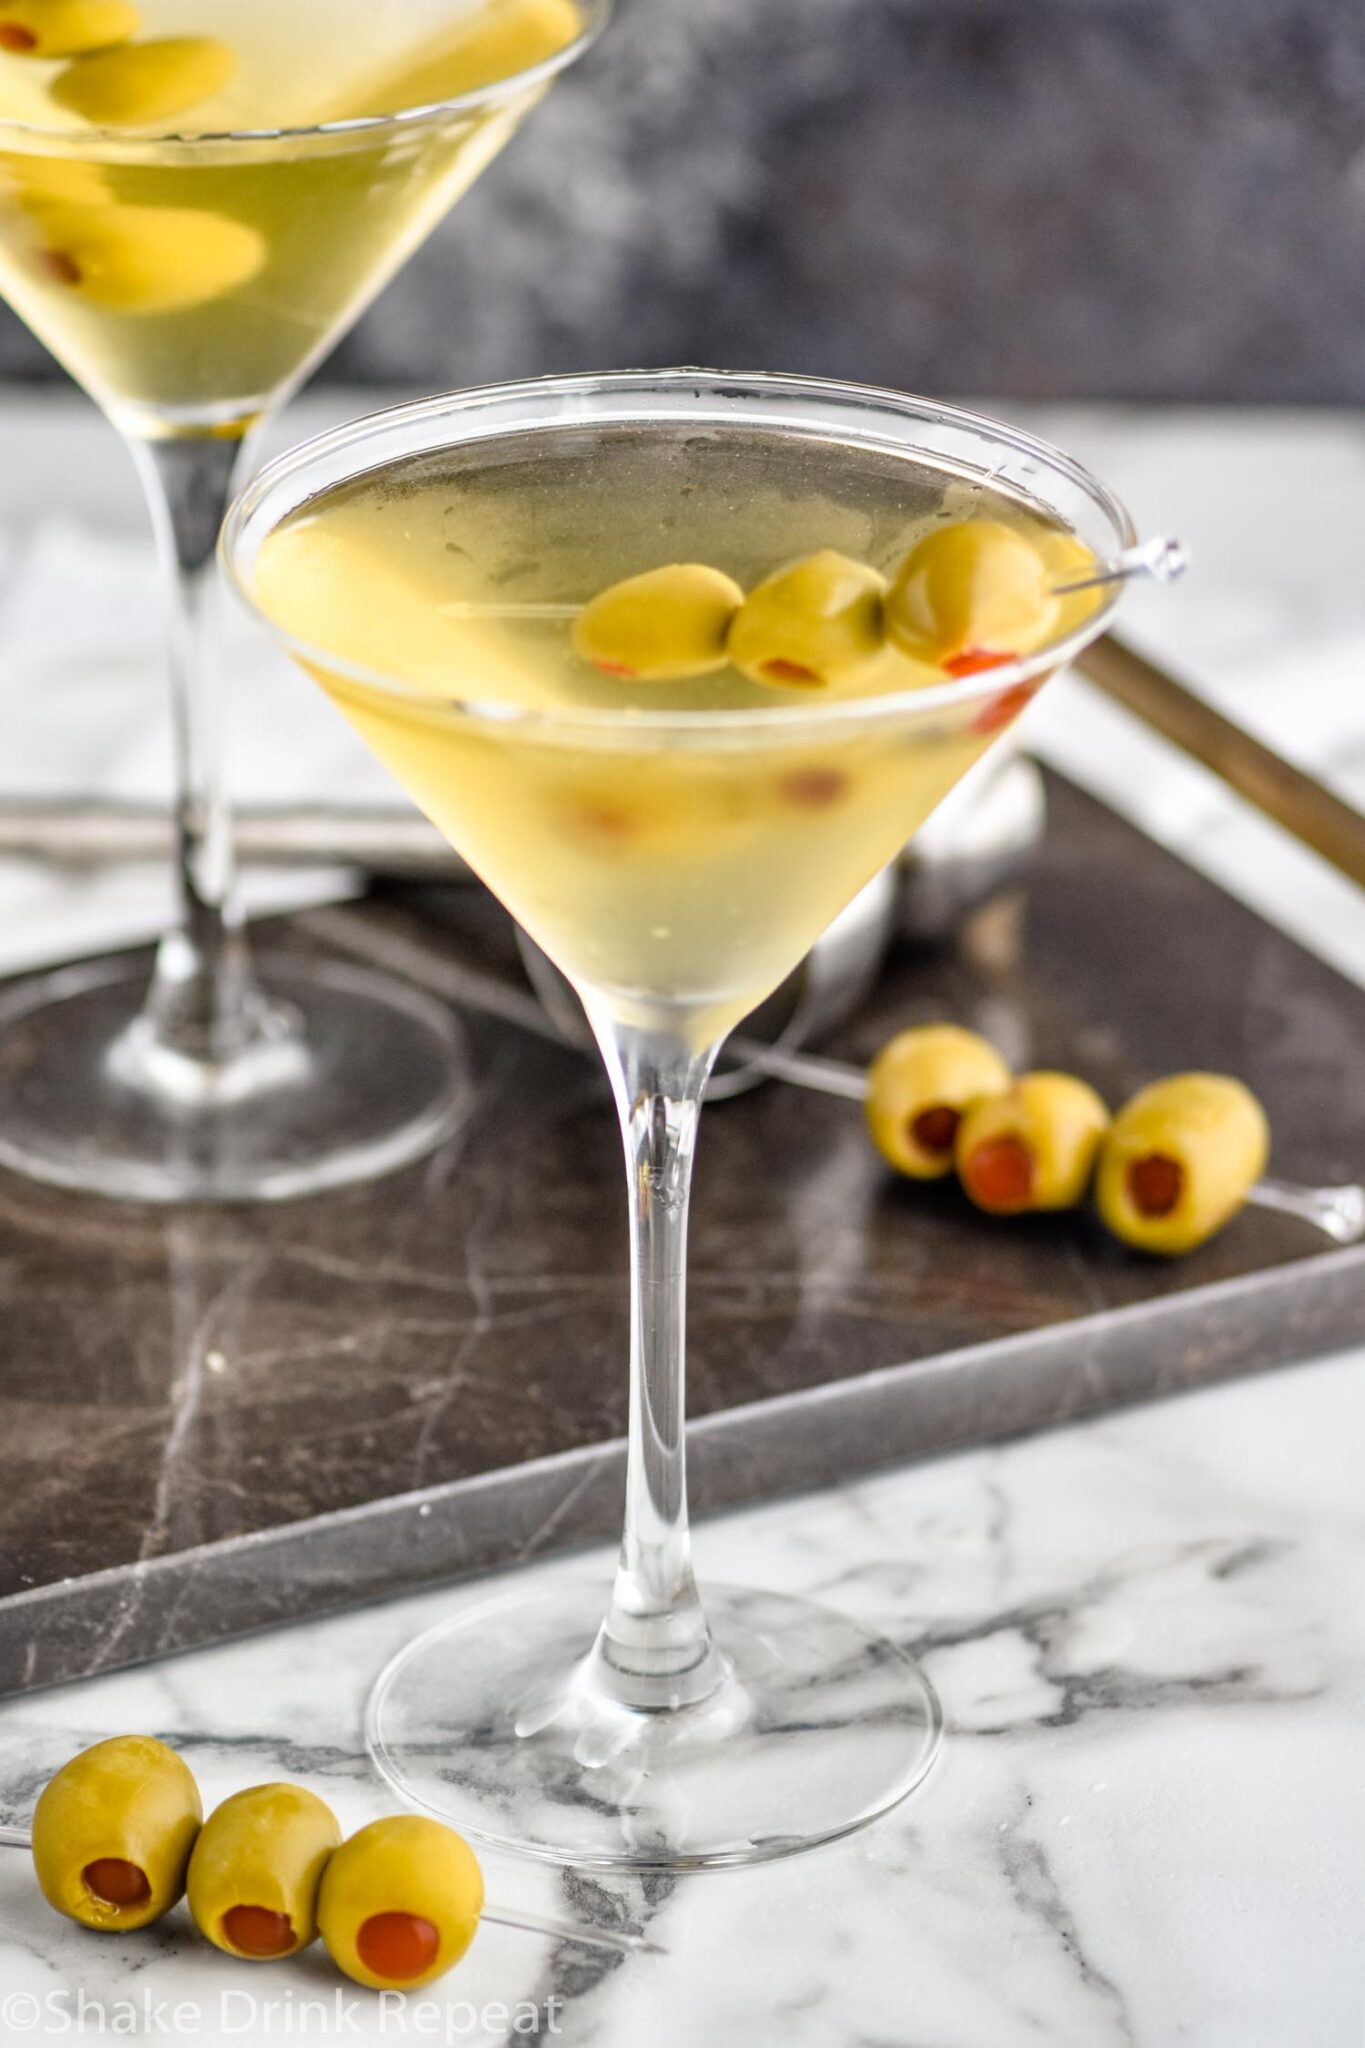 Dirty Martini Recipe - Shake Drink Repeat